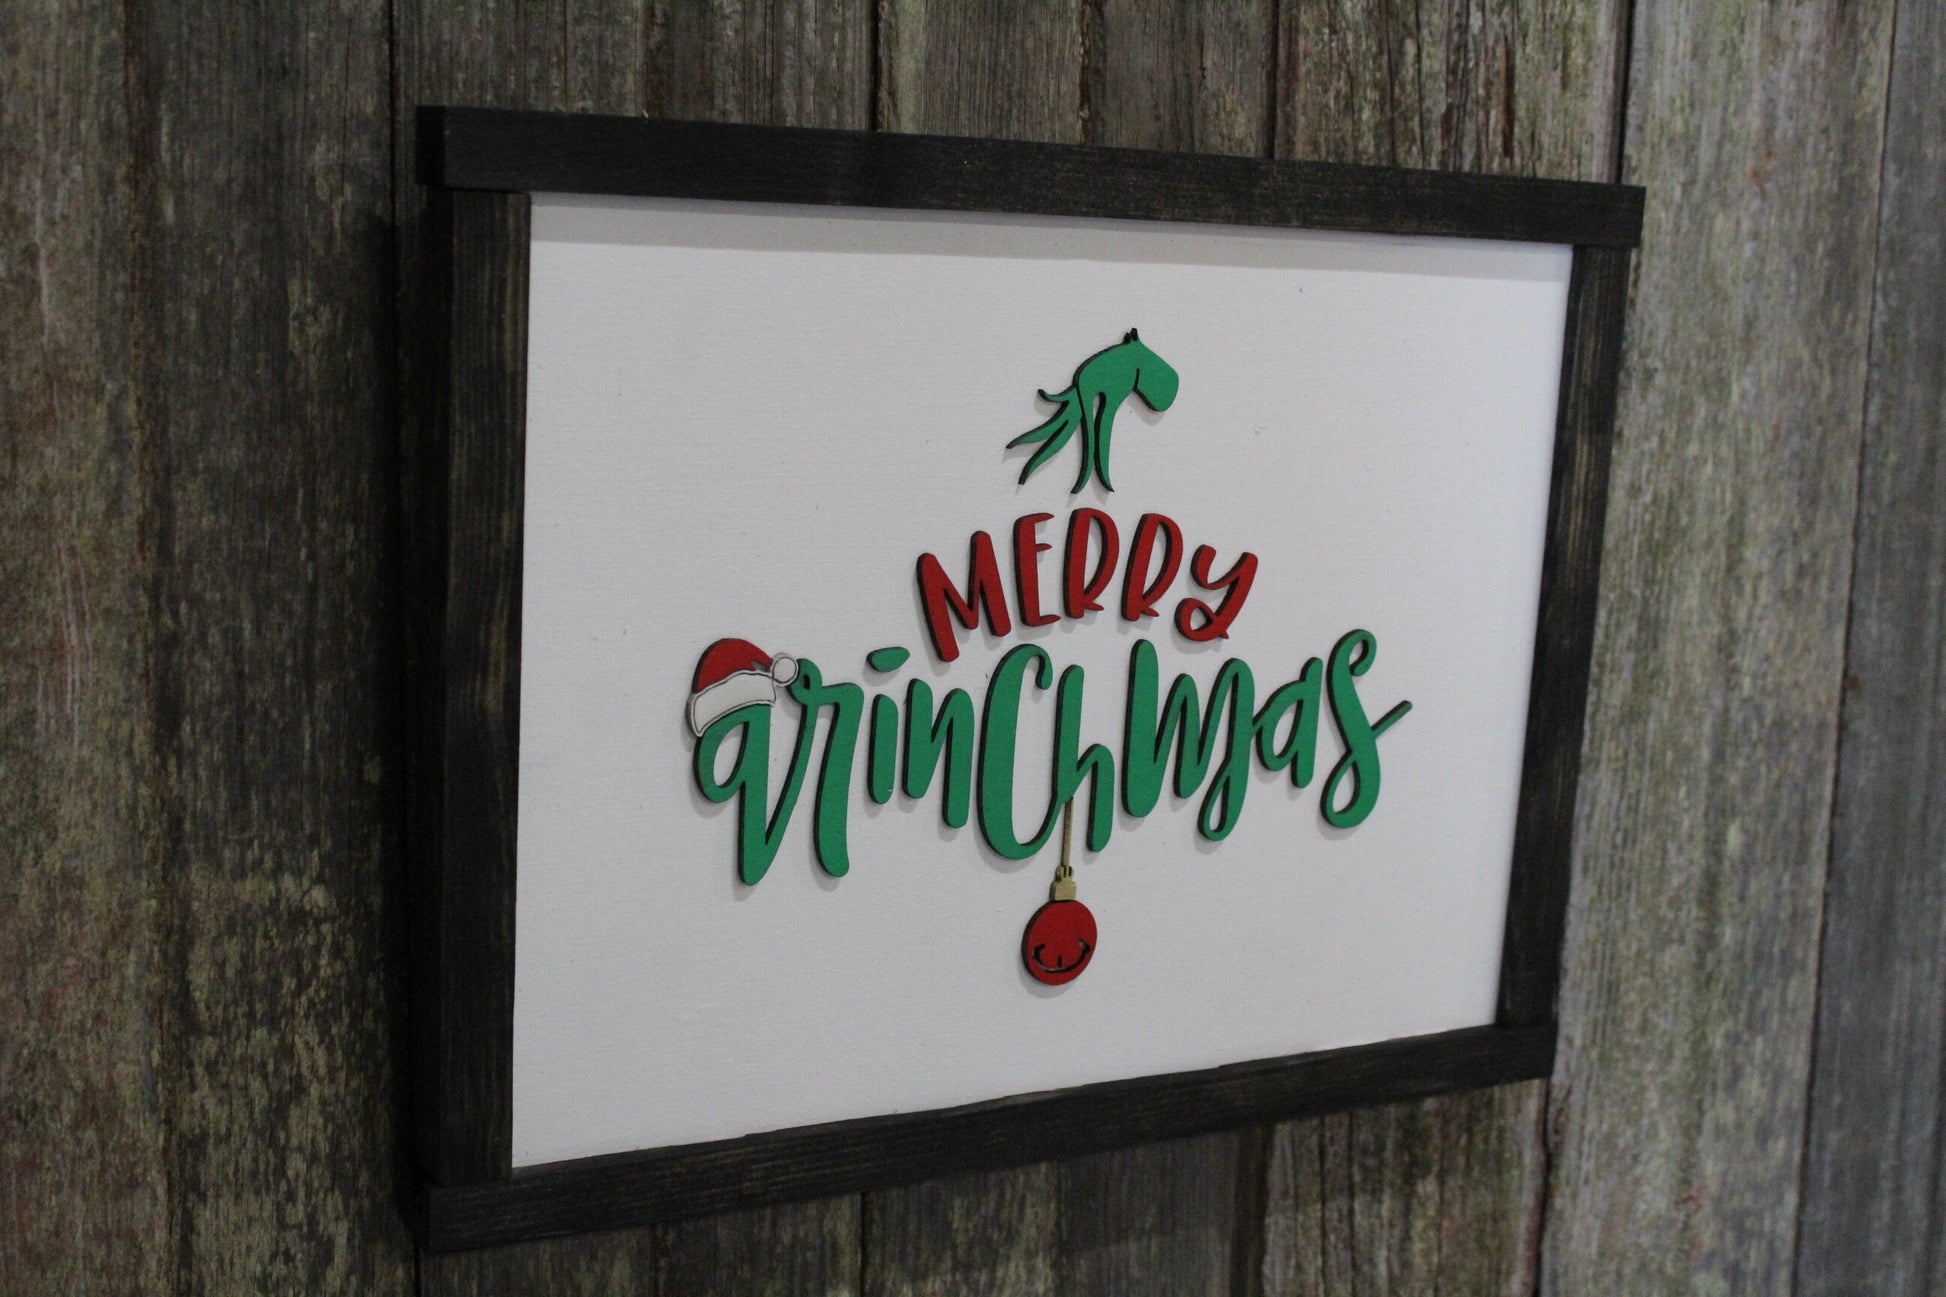 Merry Grouch mas Sign Raised 3D Wood The Mean One Christmas Décor Decoration Wall Art Farmhouse Rustic Primitive Fingers Smile Hand Festive